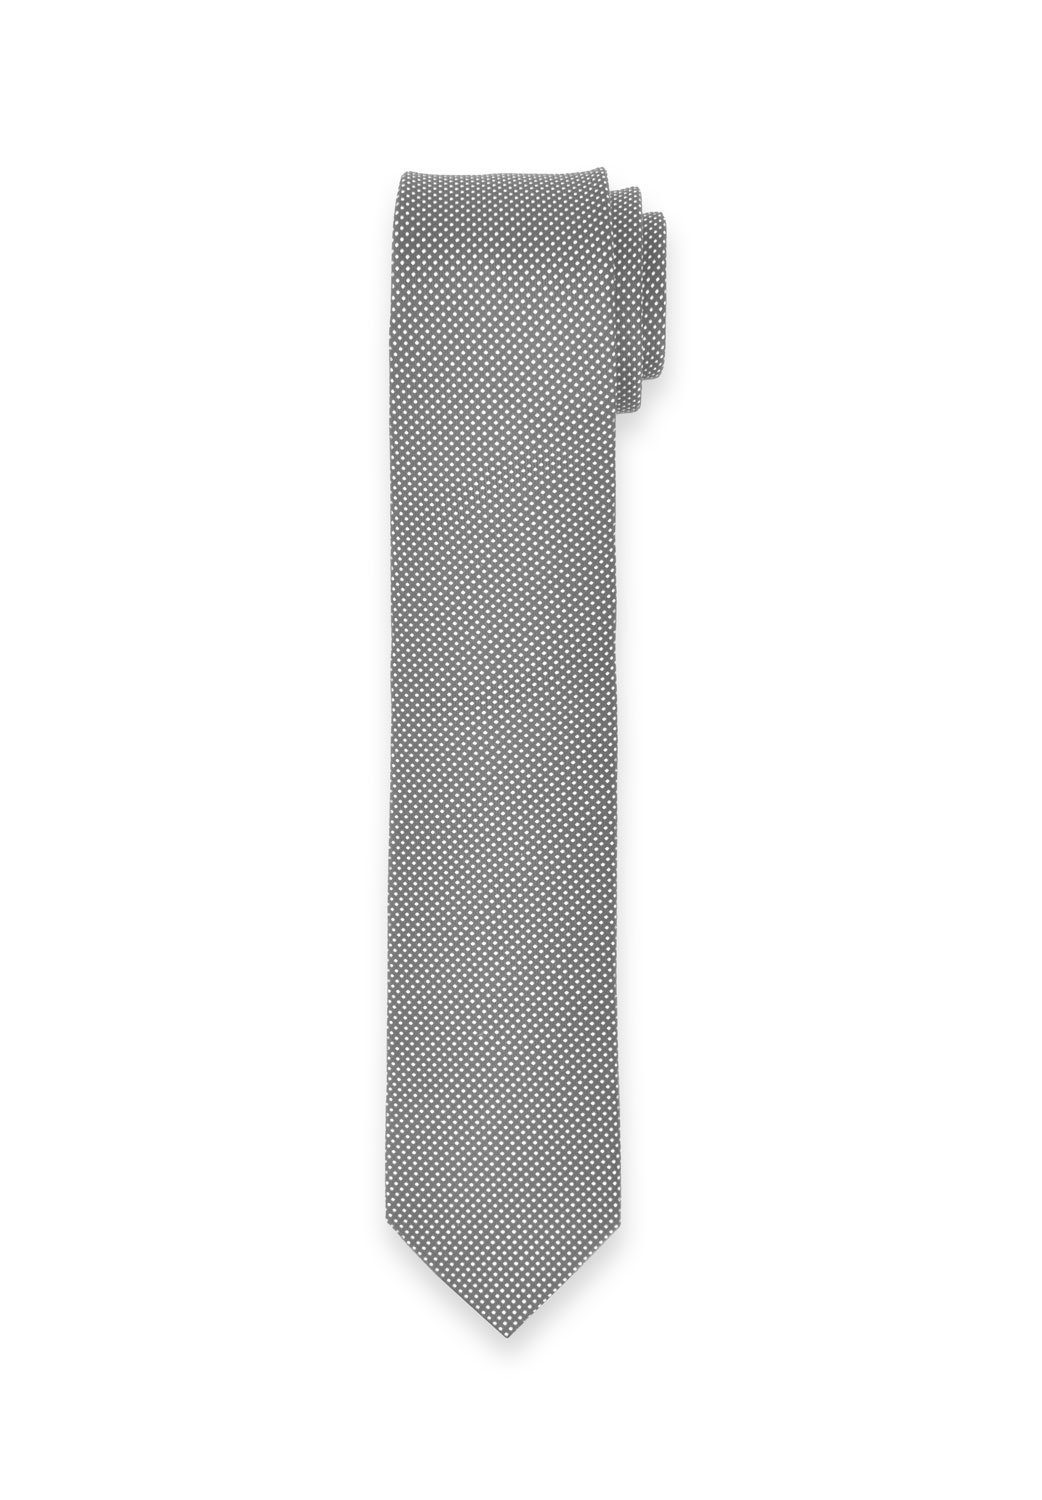 MARVELIS Krawatte Krawatte - Grau/Weiß 6,5 Punkte - - cm